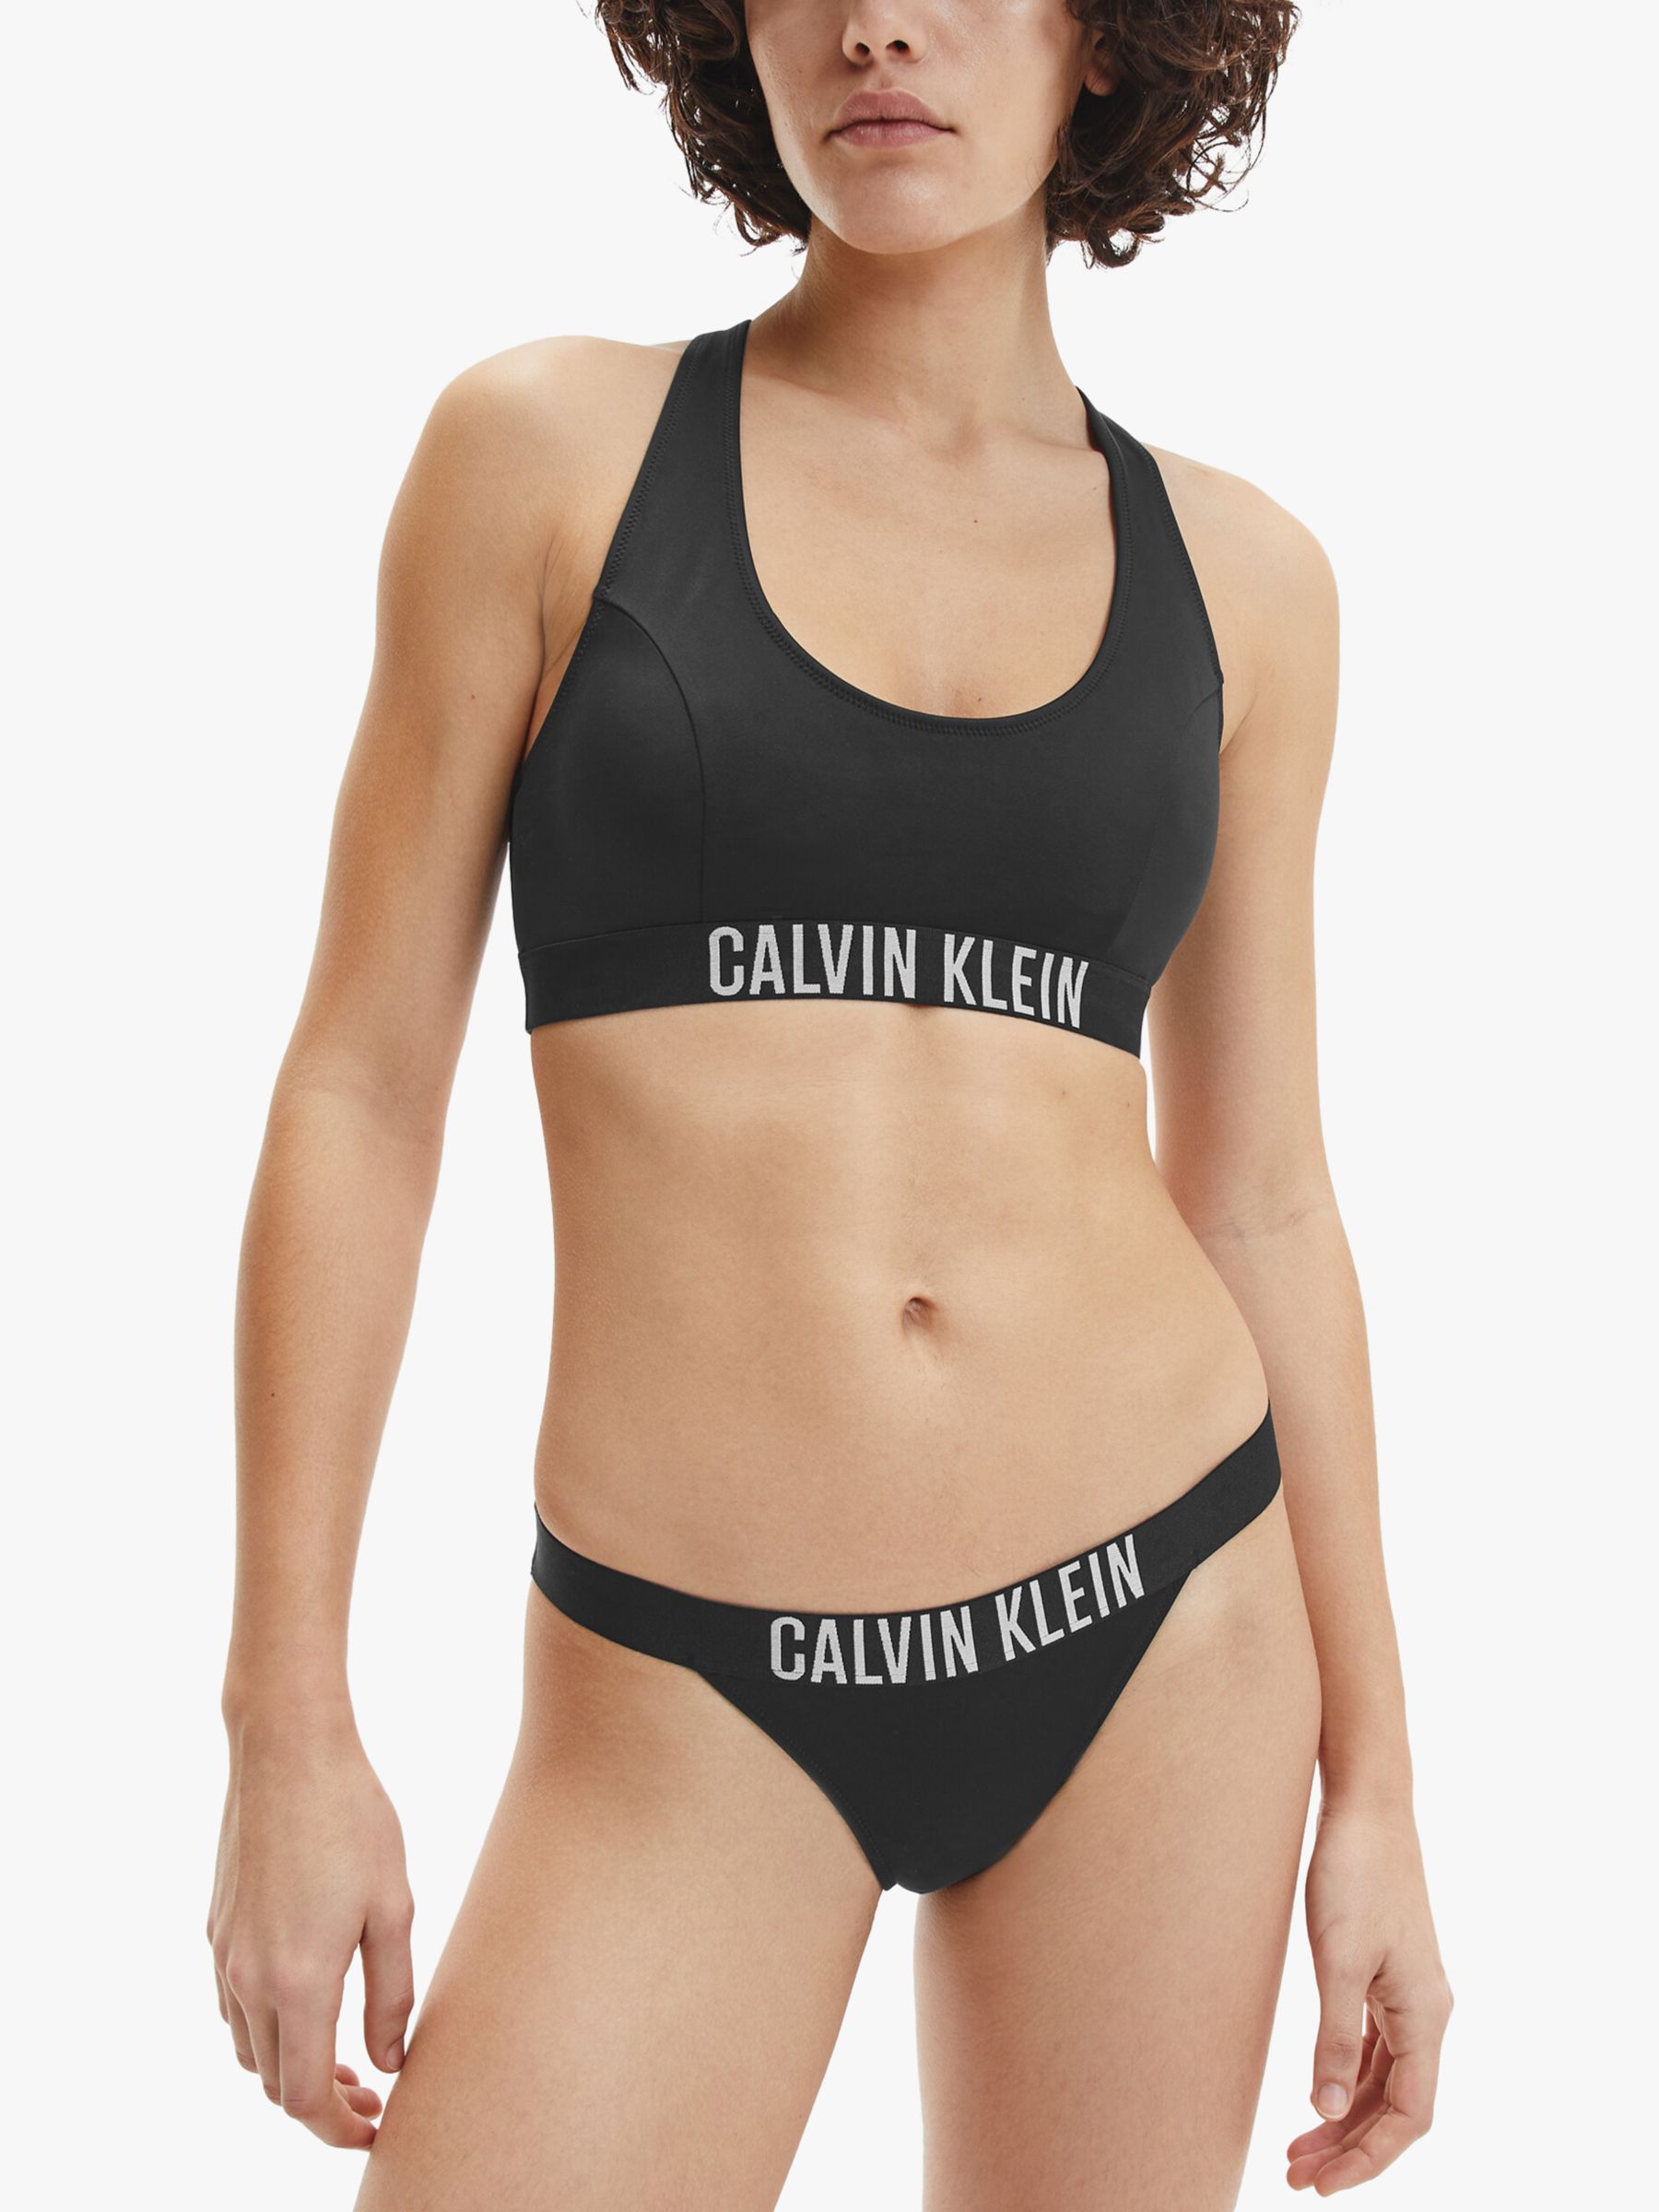 Calvin Power Brazilian Bikini Bottoms, Black, XS